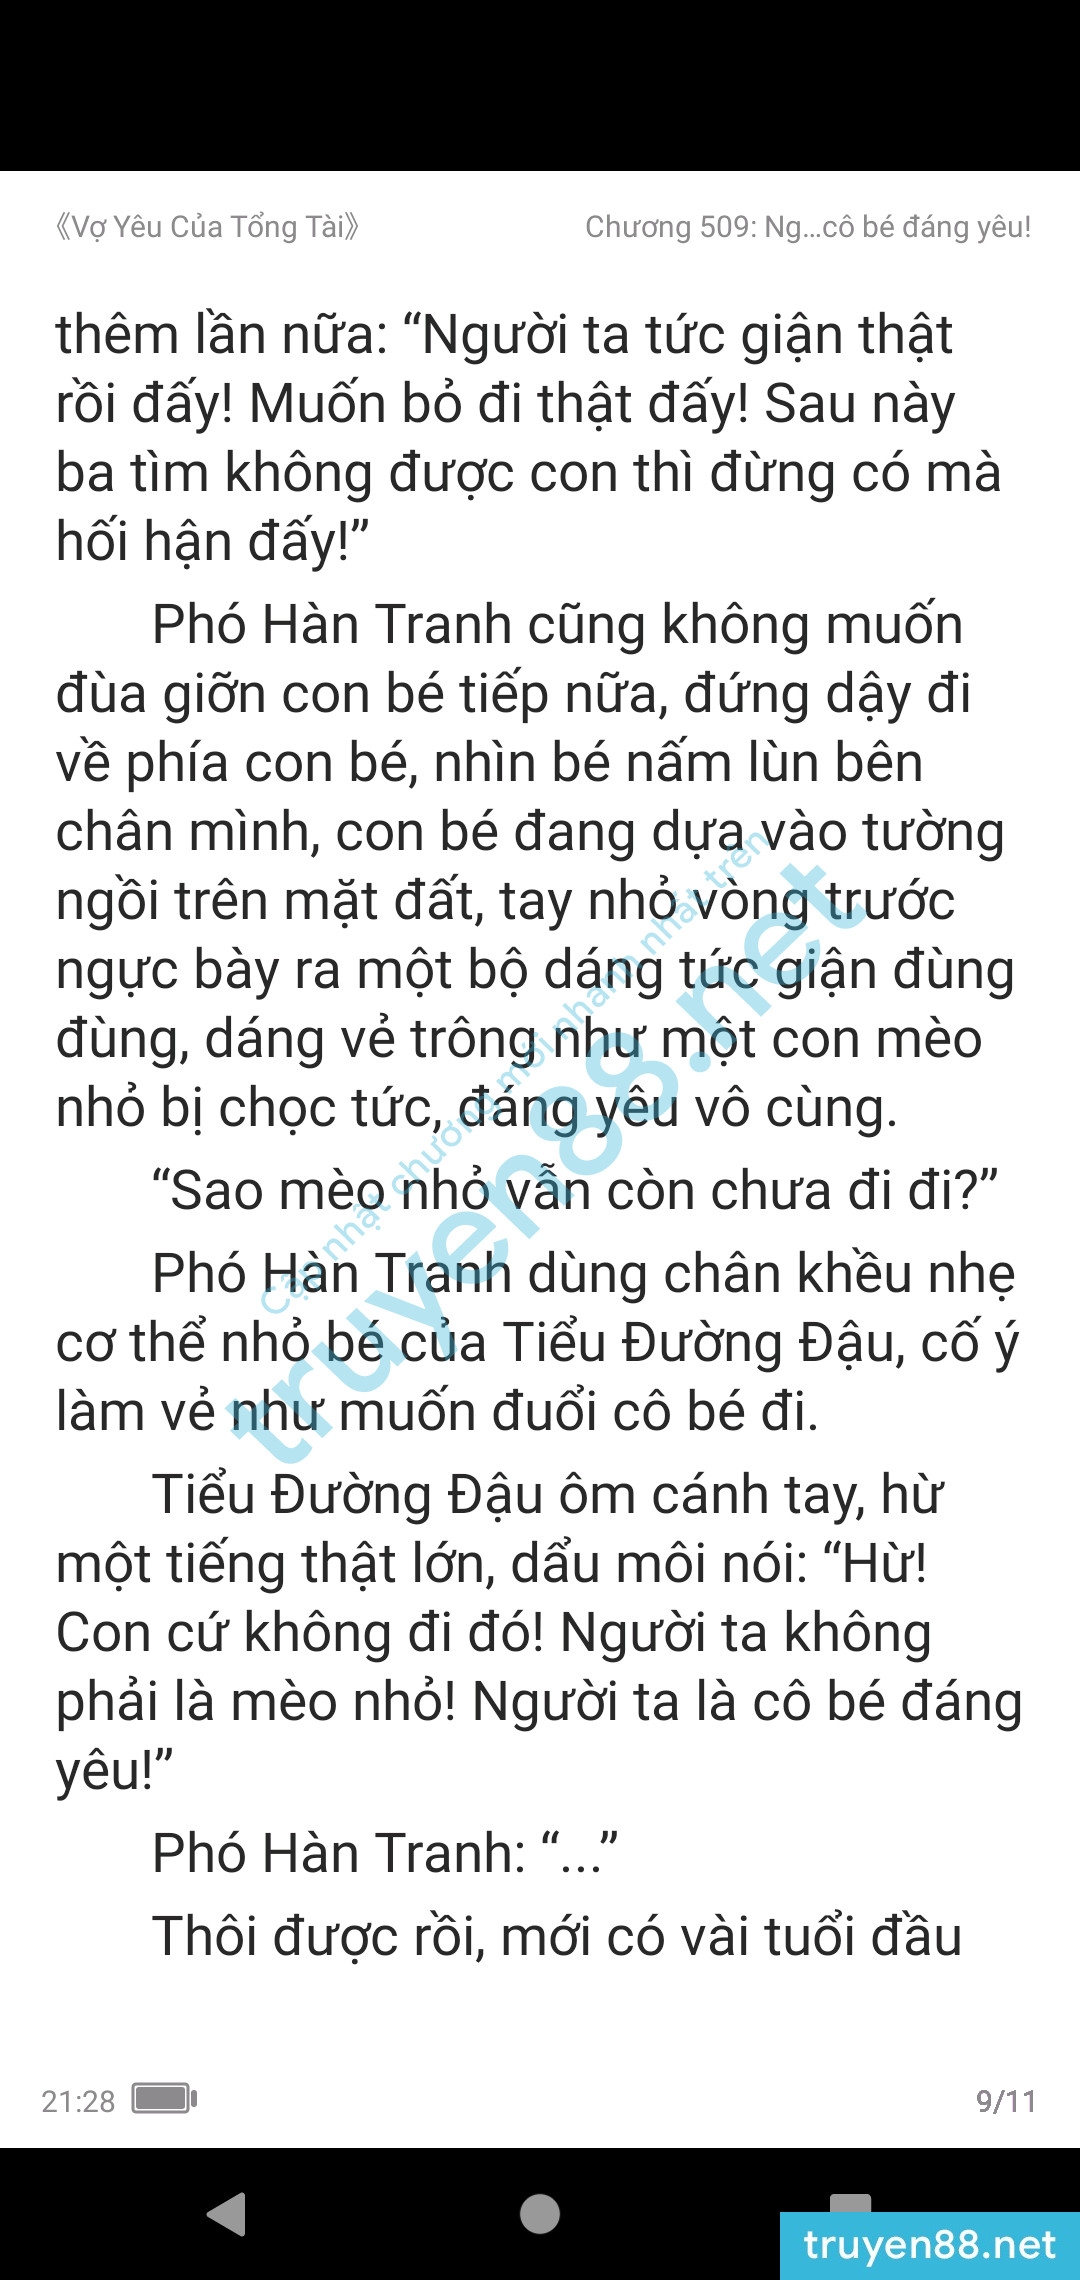 vo-yeu-cua-tong-tai-mo-vi-lan--pho-han-tranh-519-0